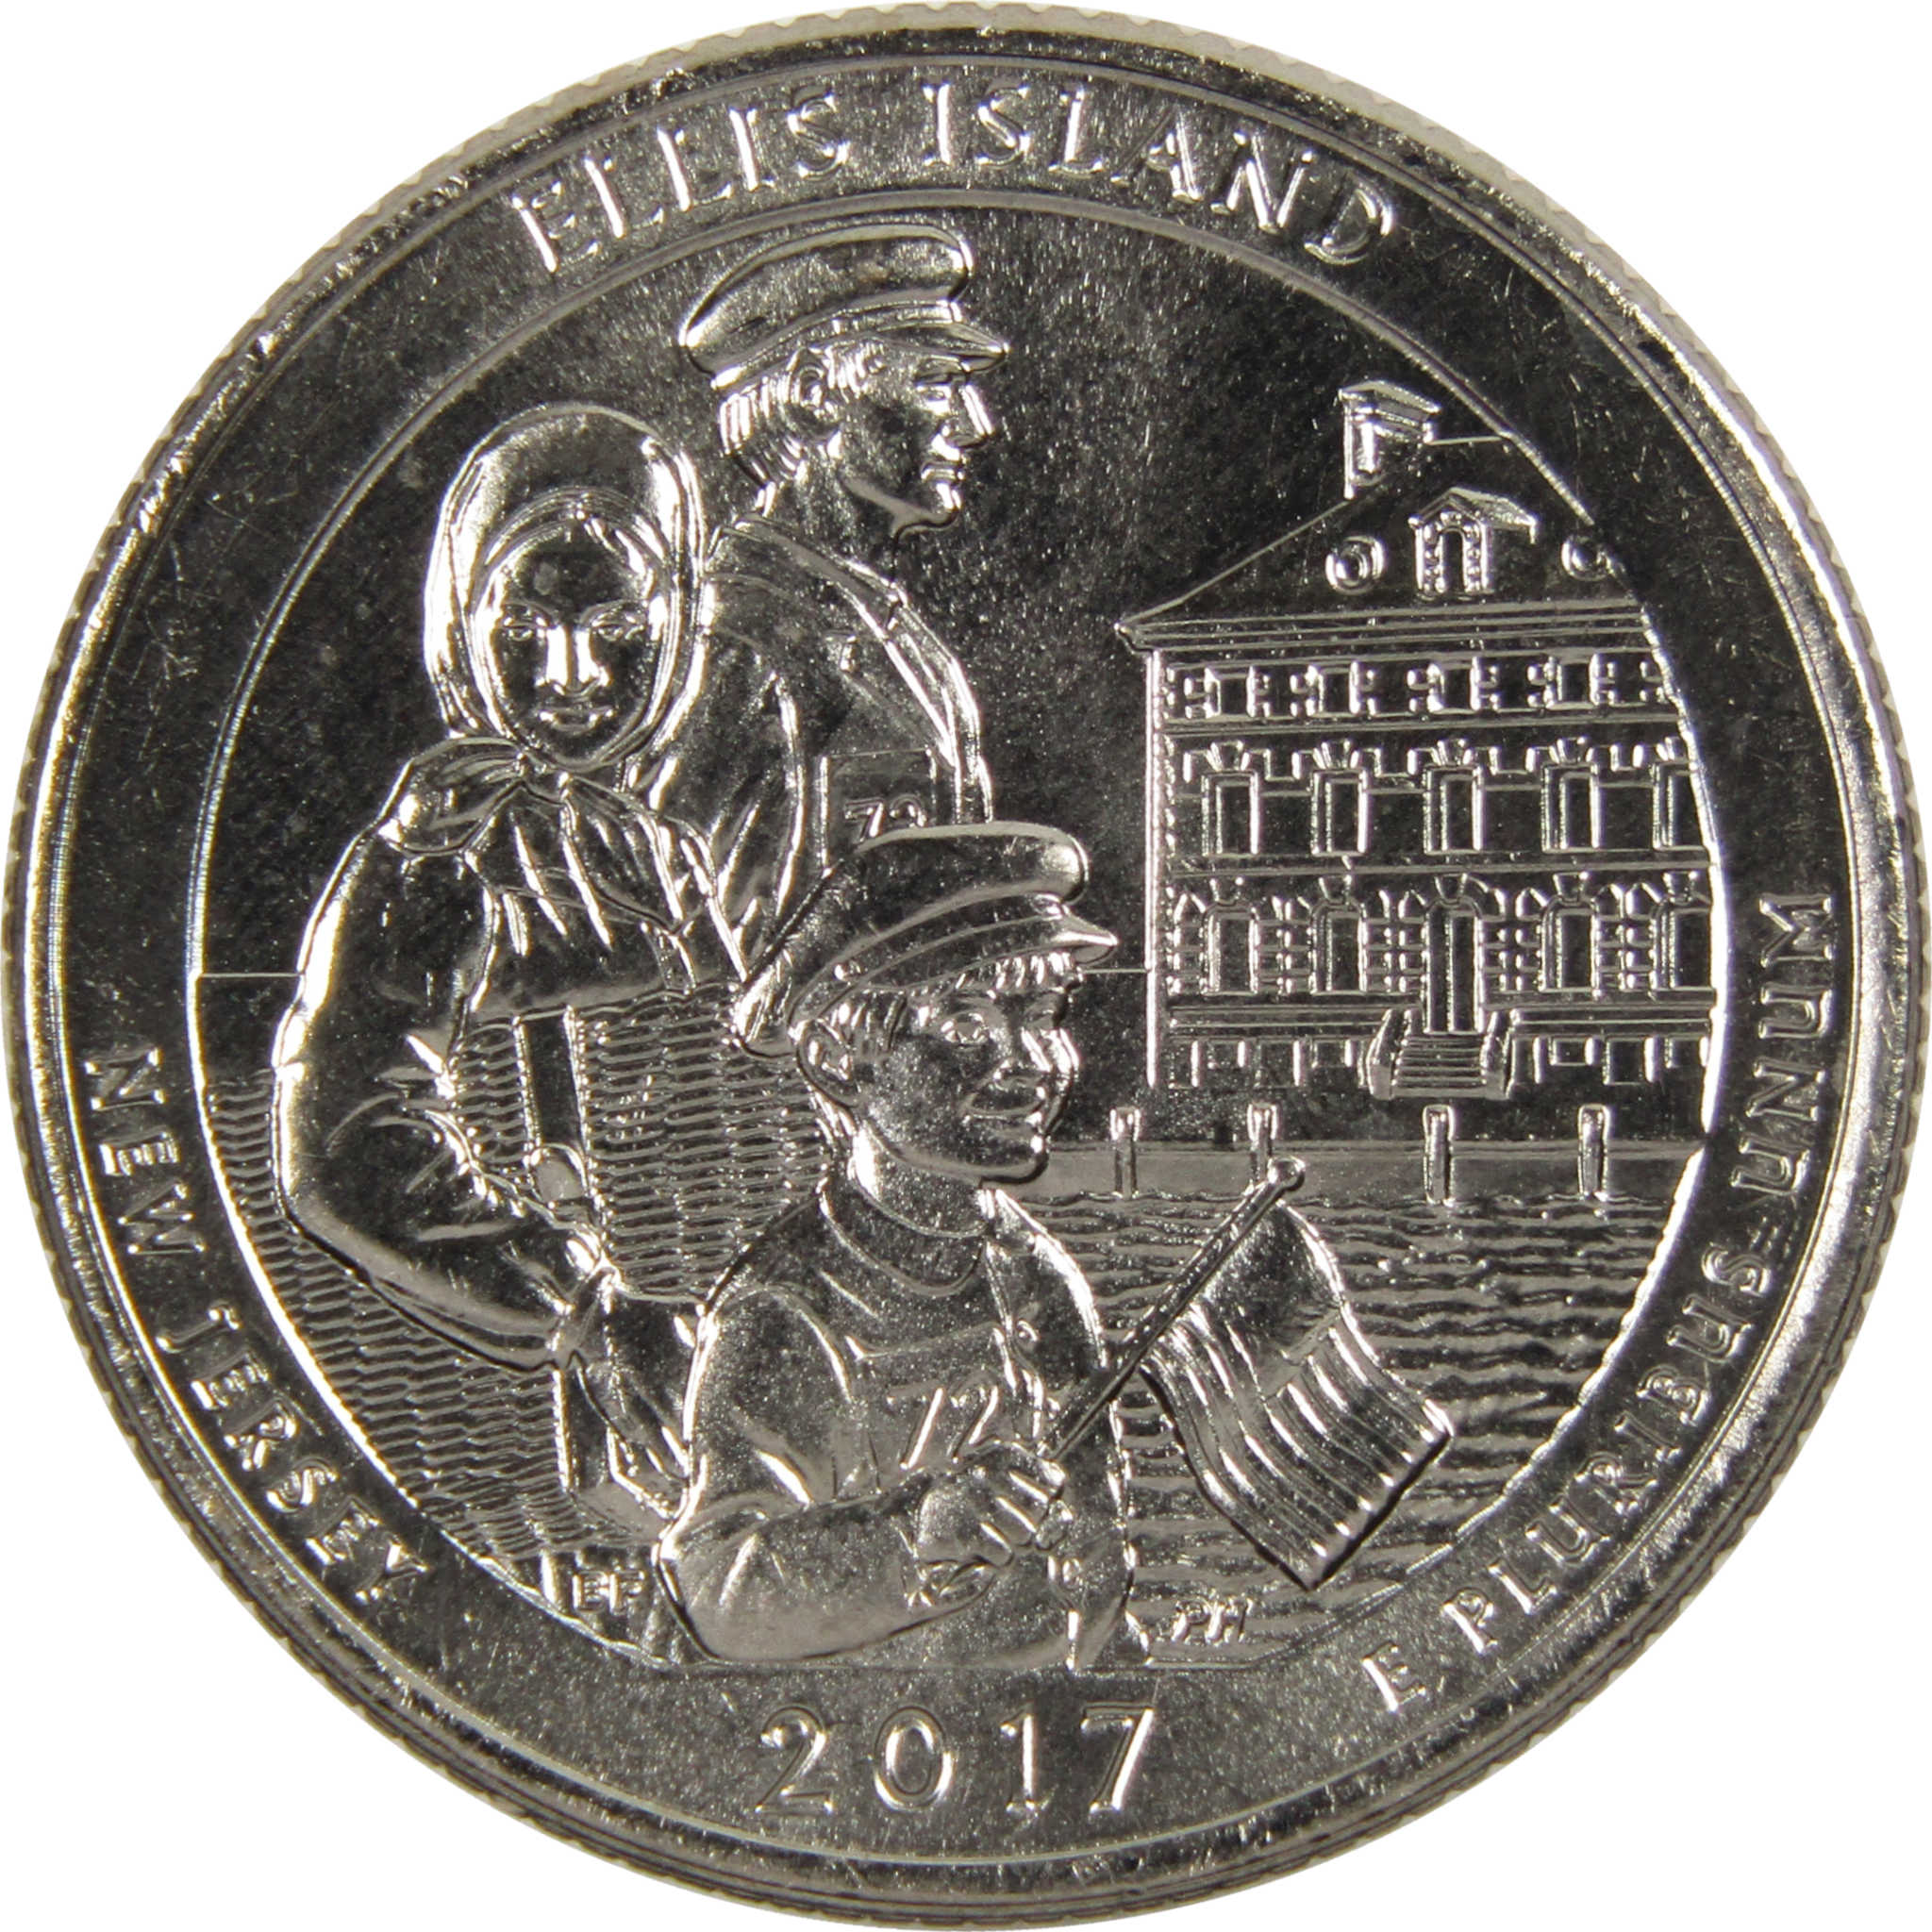 2017 D Ellis Island National Park Quarter BU Uncirculated Clad Coin